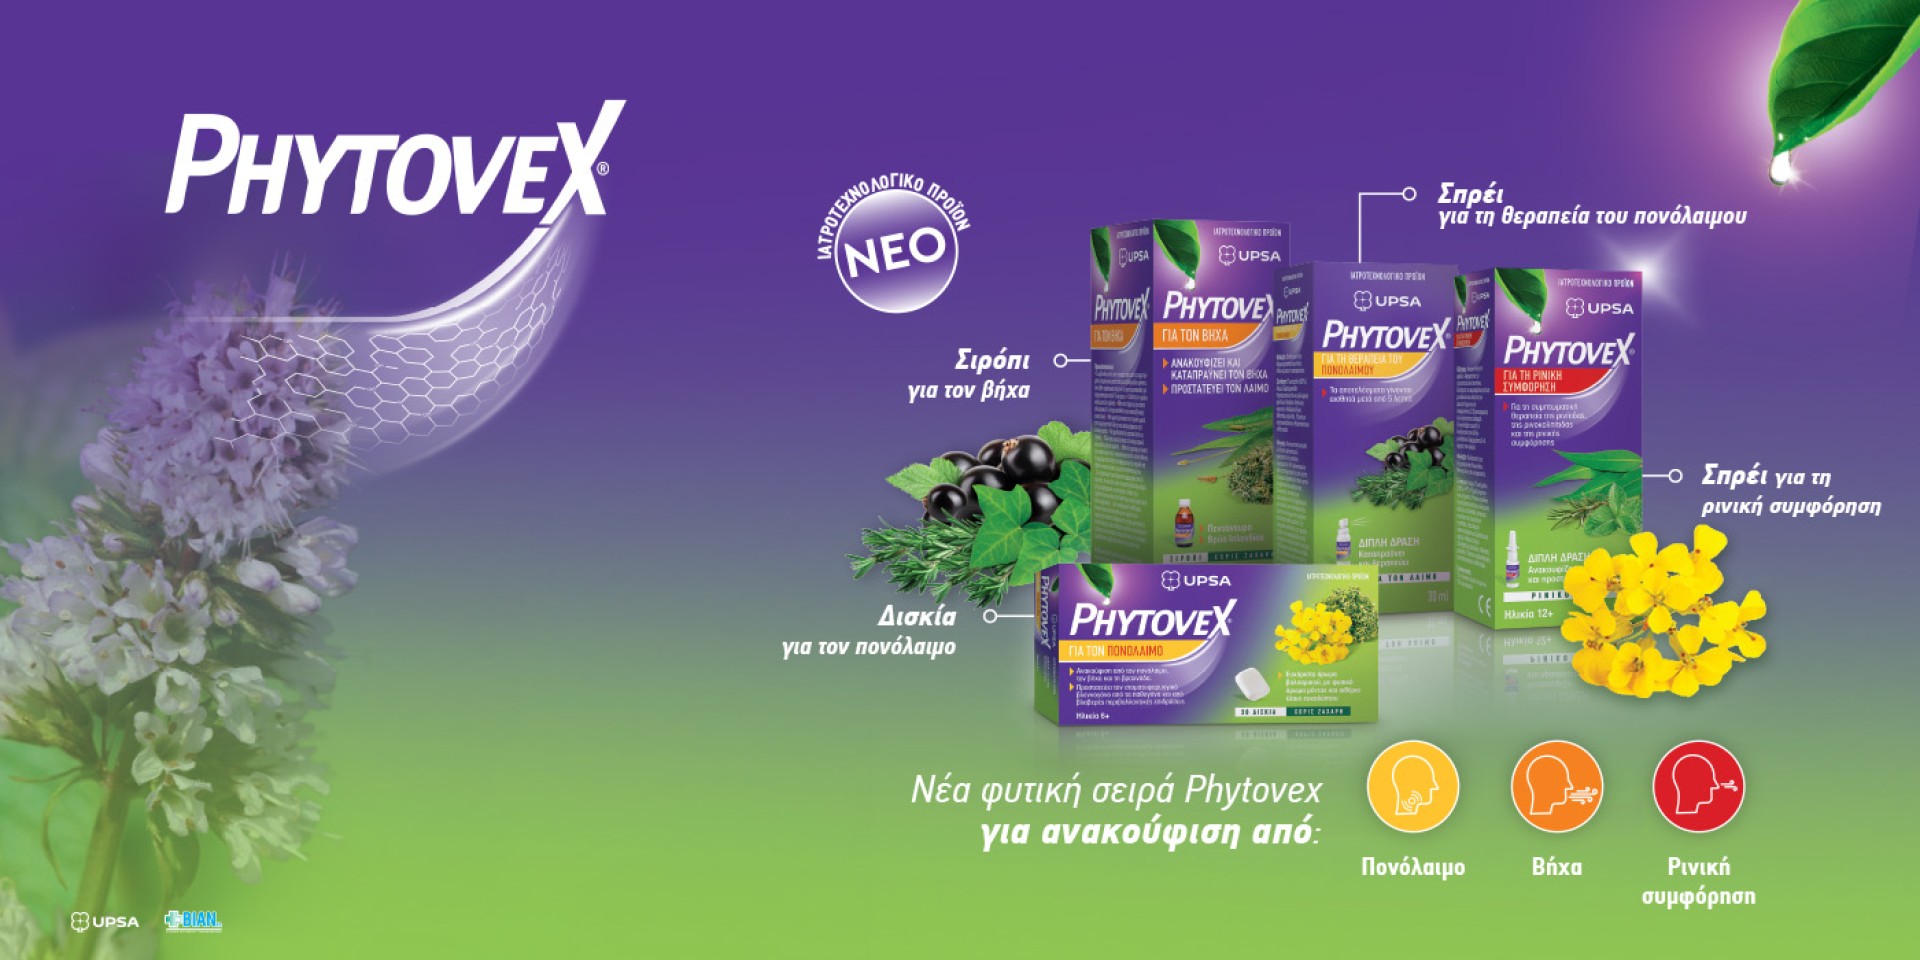 Phytovex, για ανακούφιση από πονόλαιμο, βήχα και ρινική συμφόρηση!